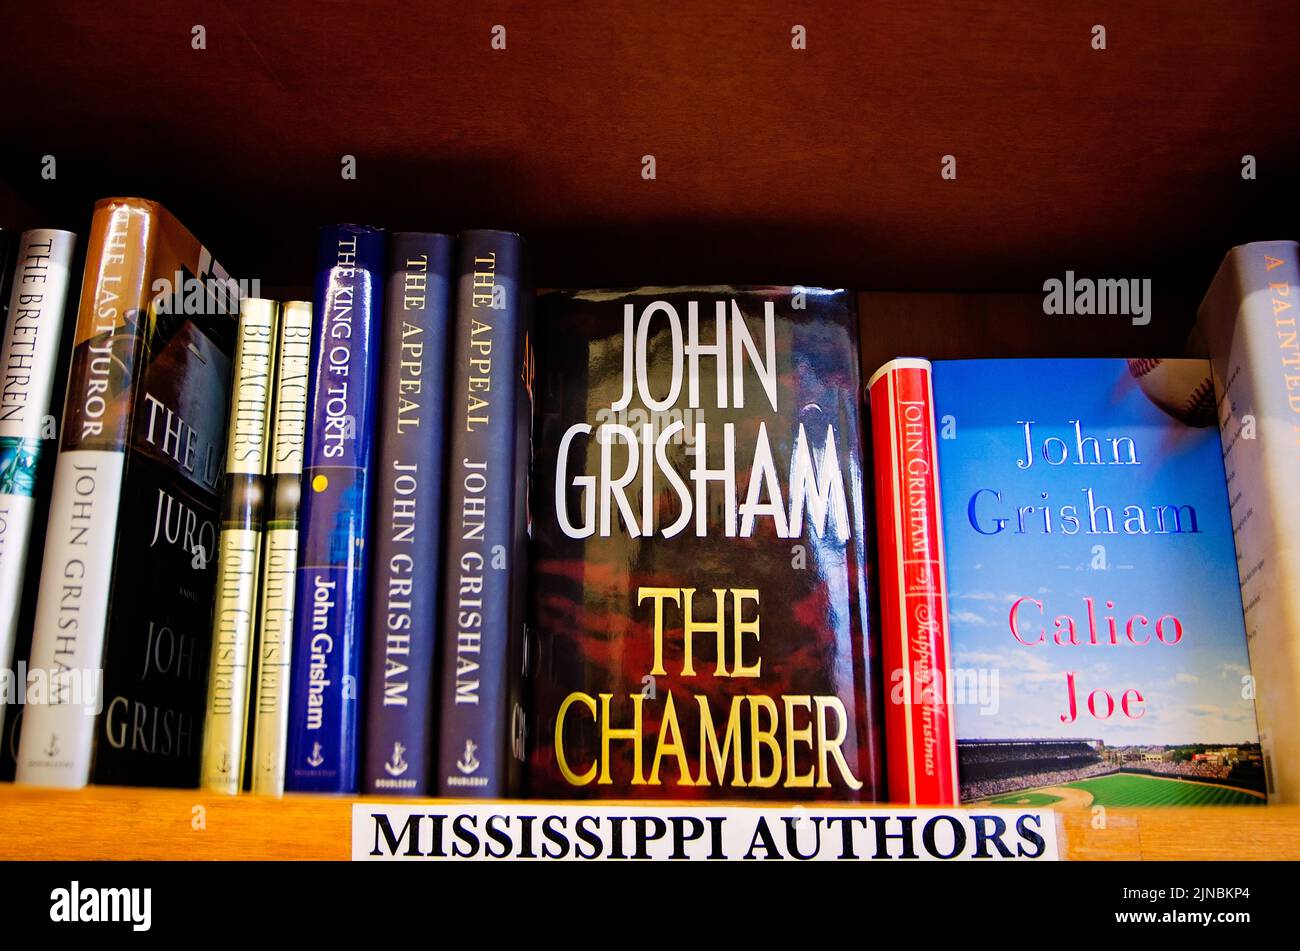 Mississippi author John Grisham’s books fill the shelves at Square Books, May 31, 2015, in Oxford, Mississippi. Stock Photo